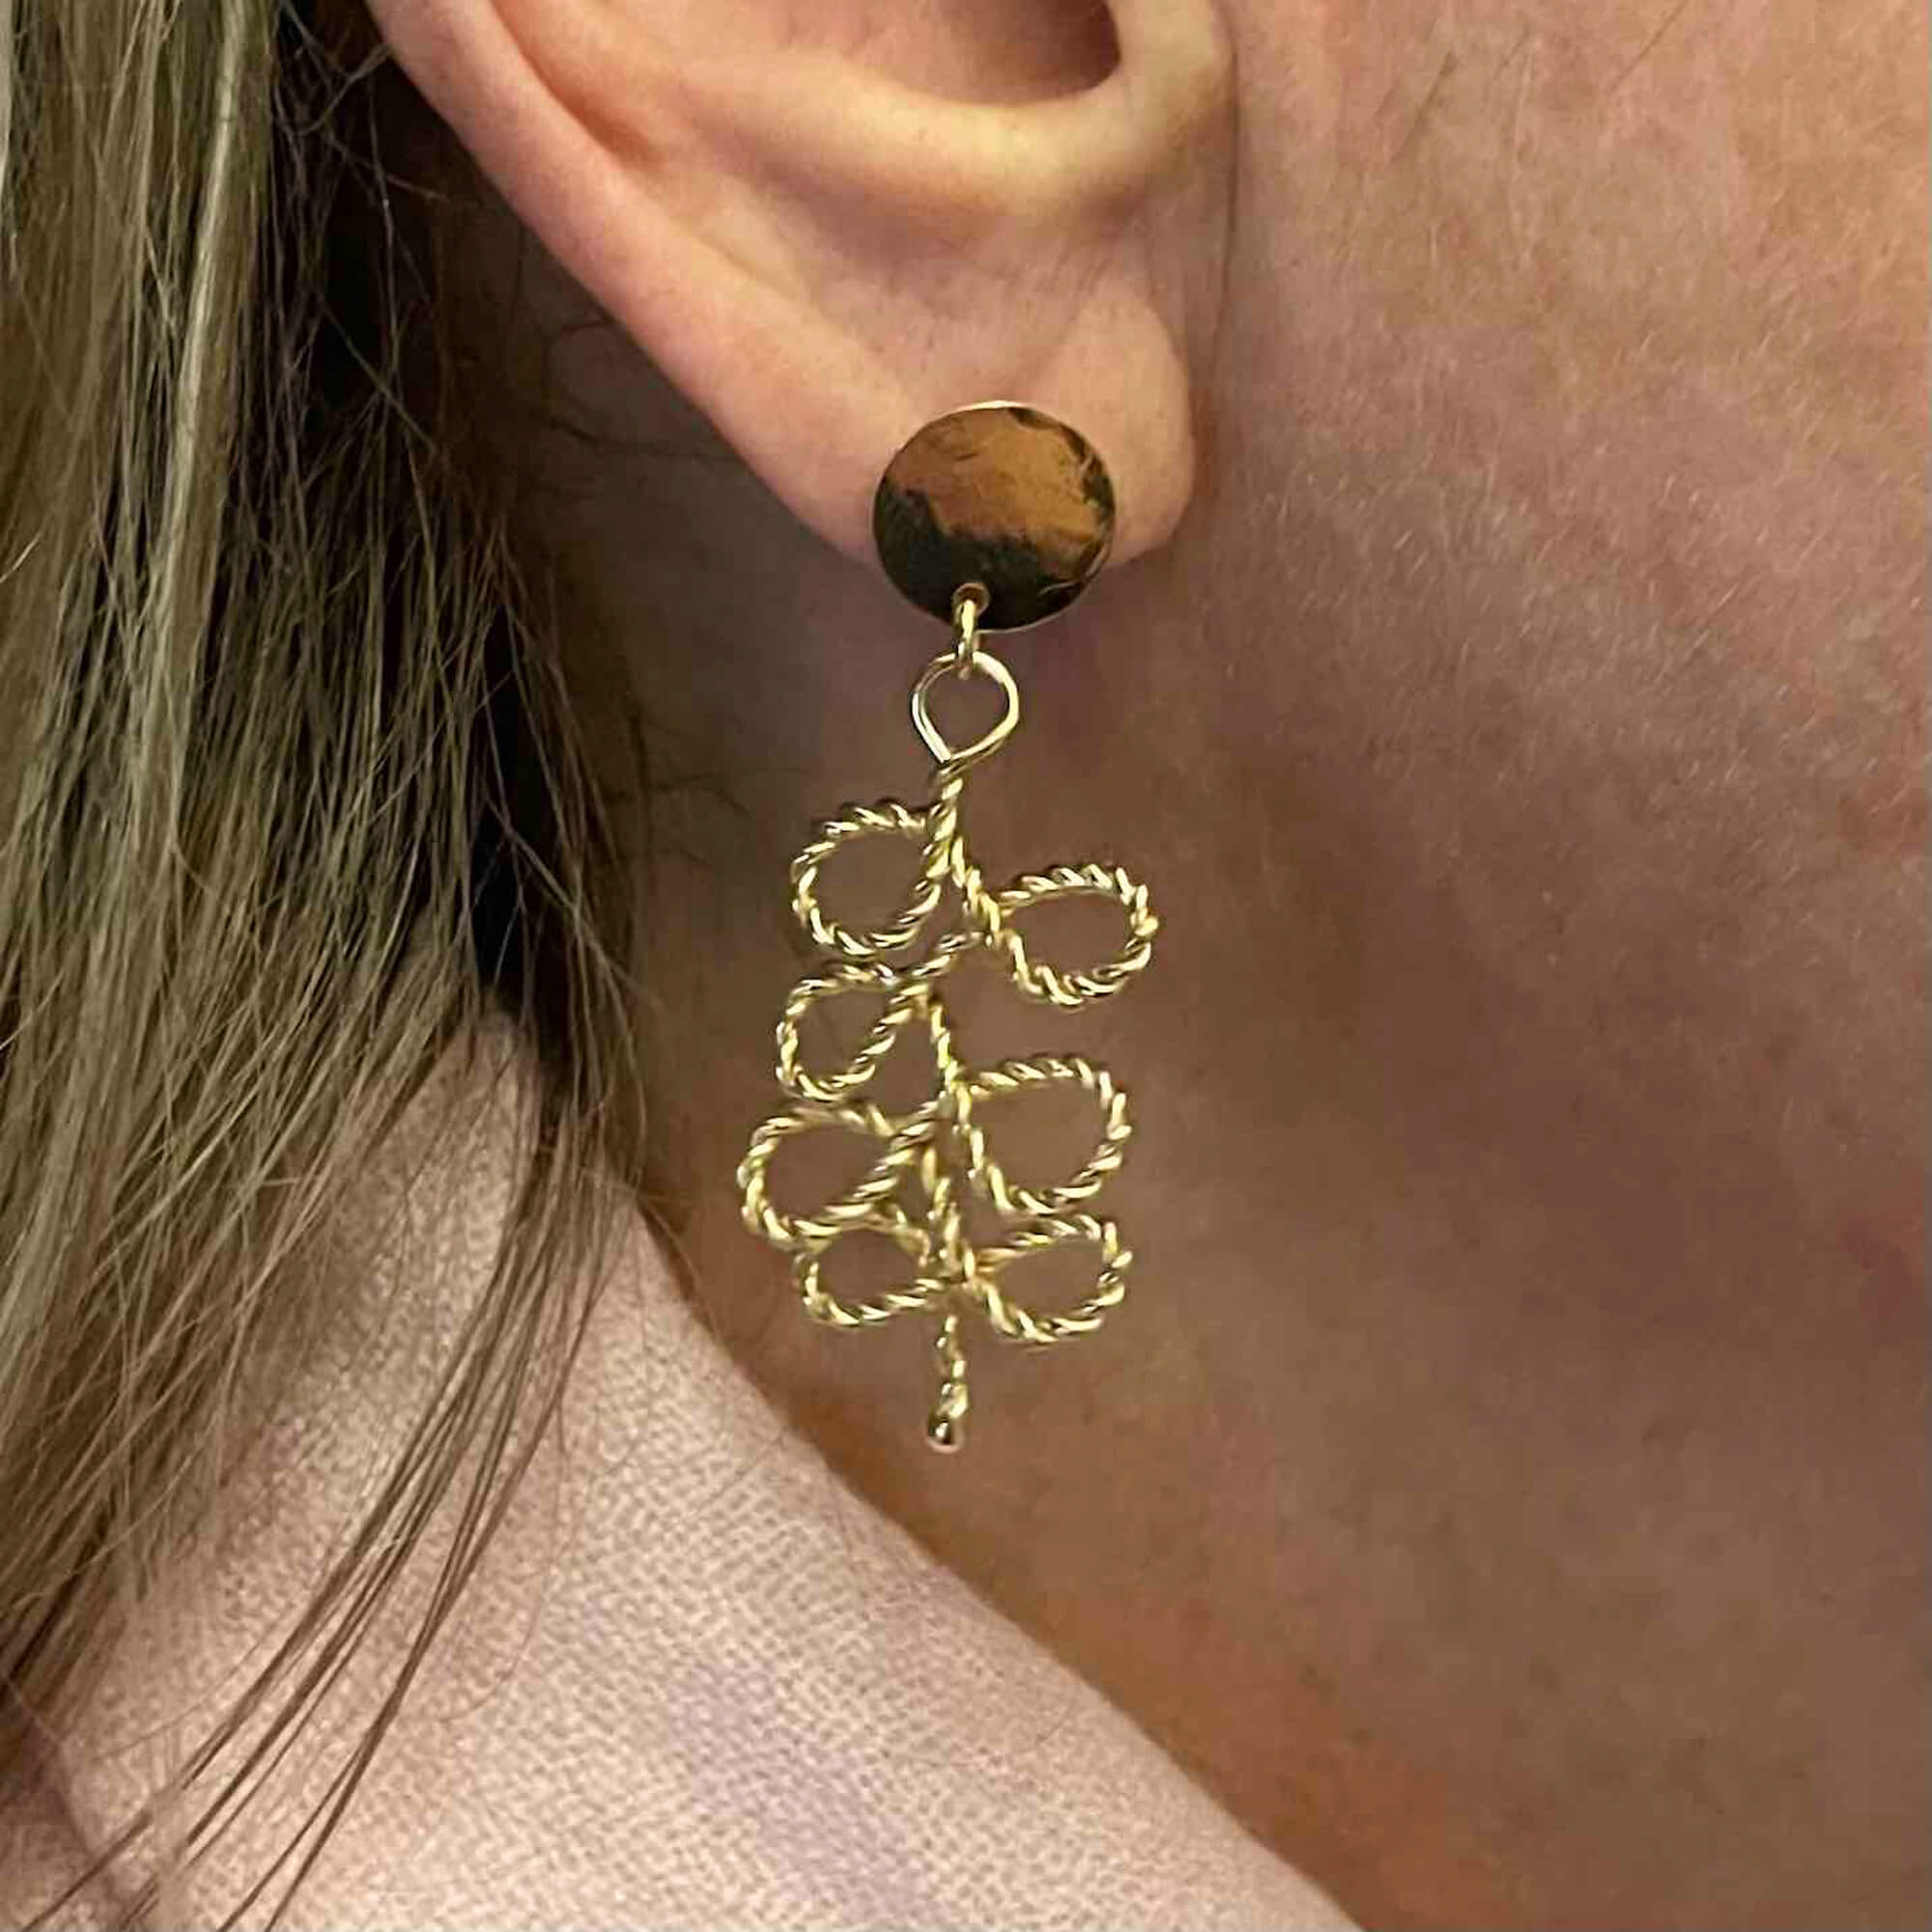 Refined and handmade gilt earrings